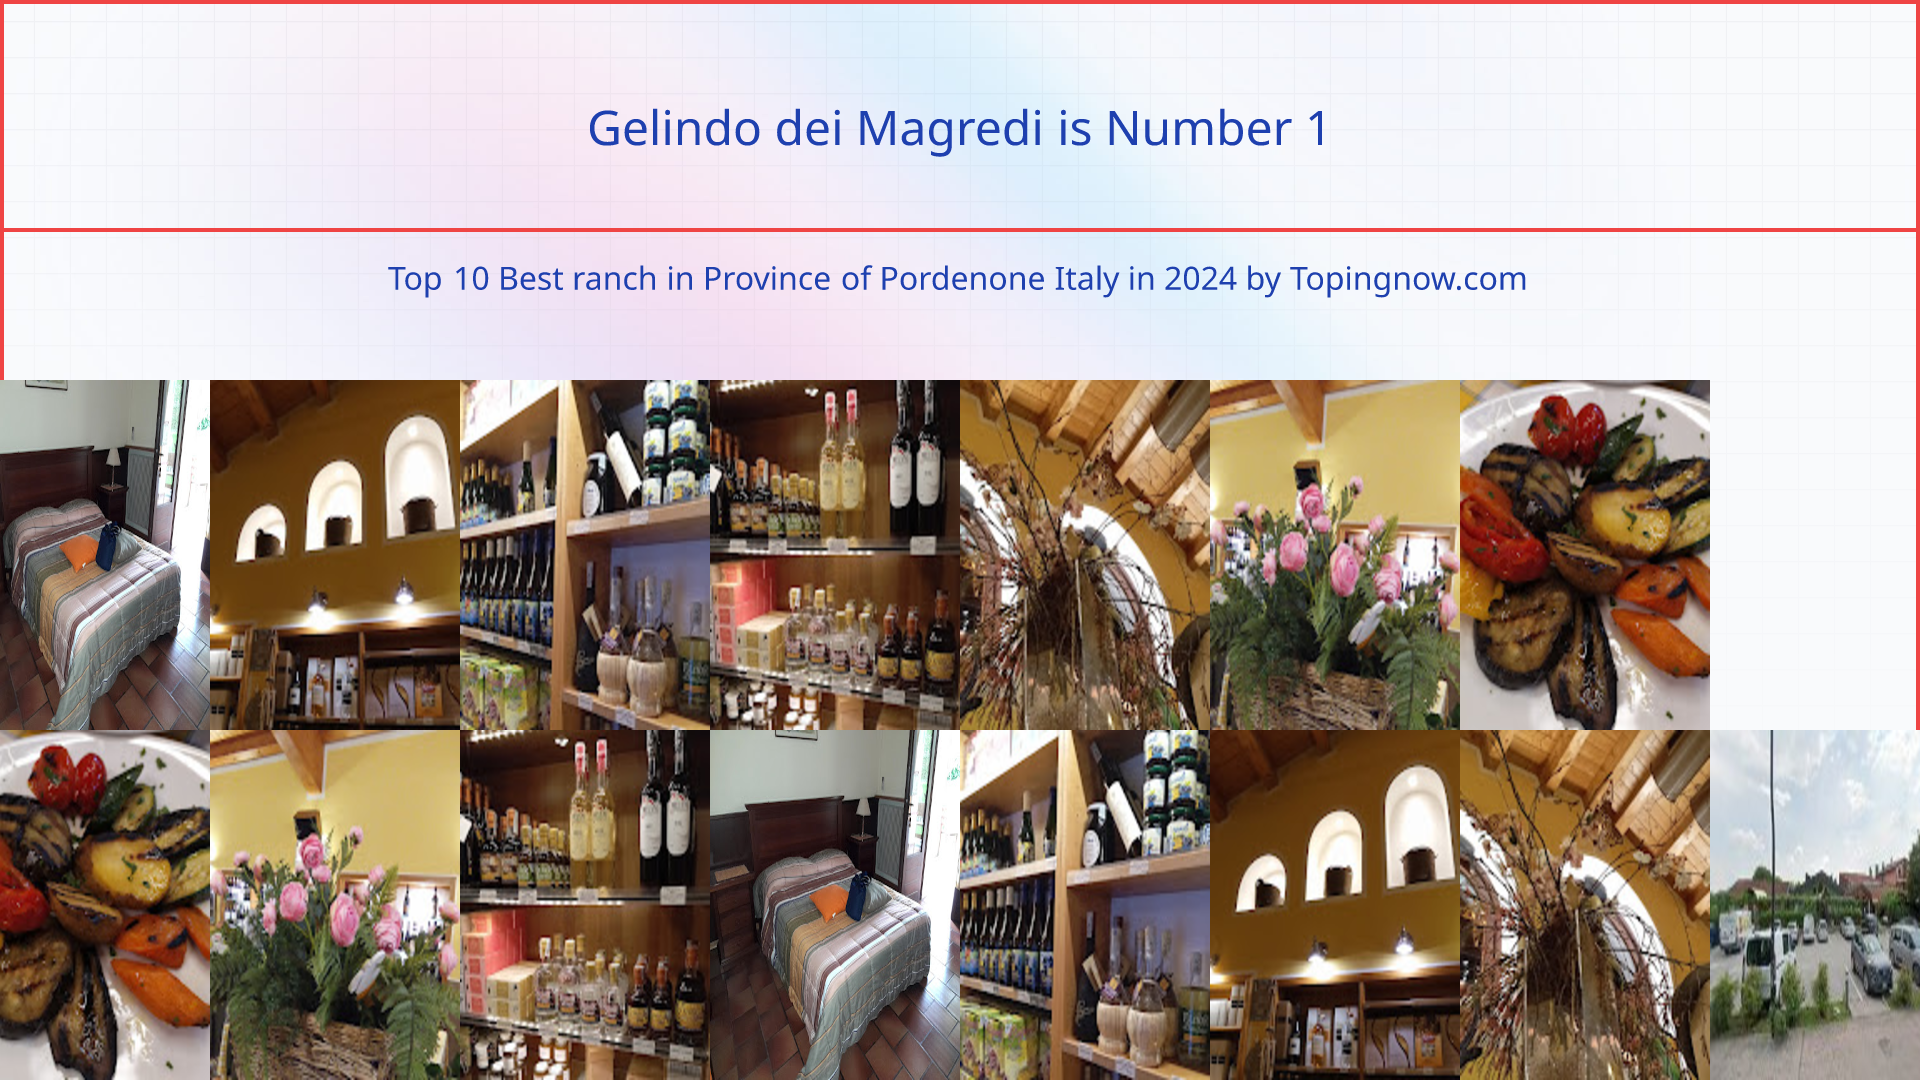 Gelindo dei Magredi: Top 10 Best ranch in Province of Pordenone Italy in 2024